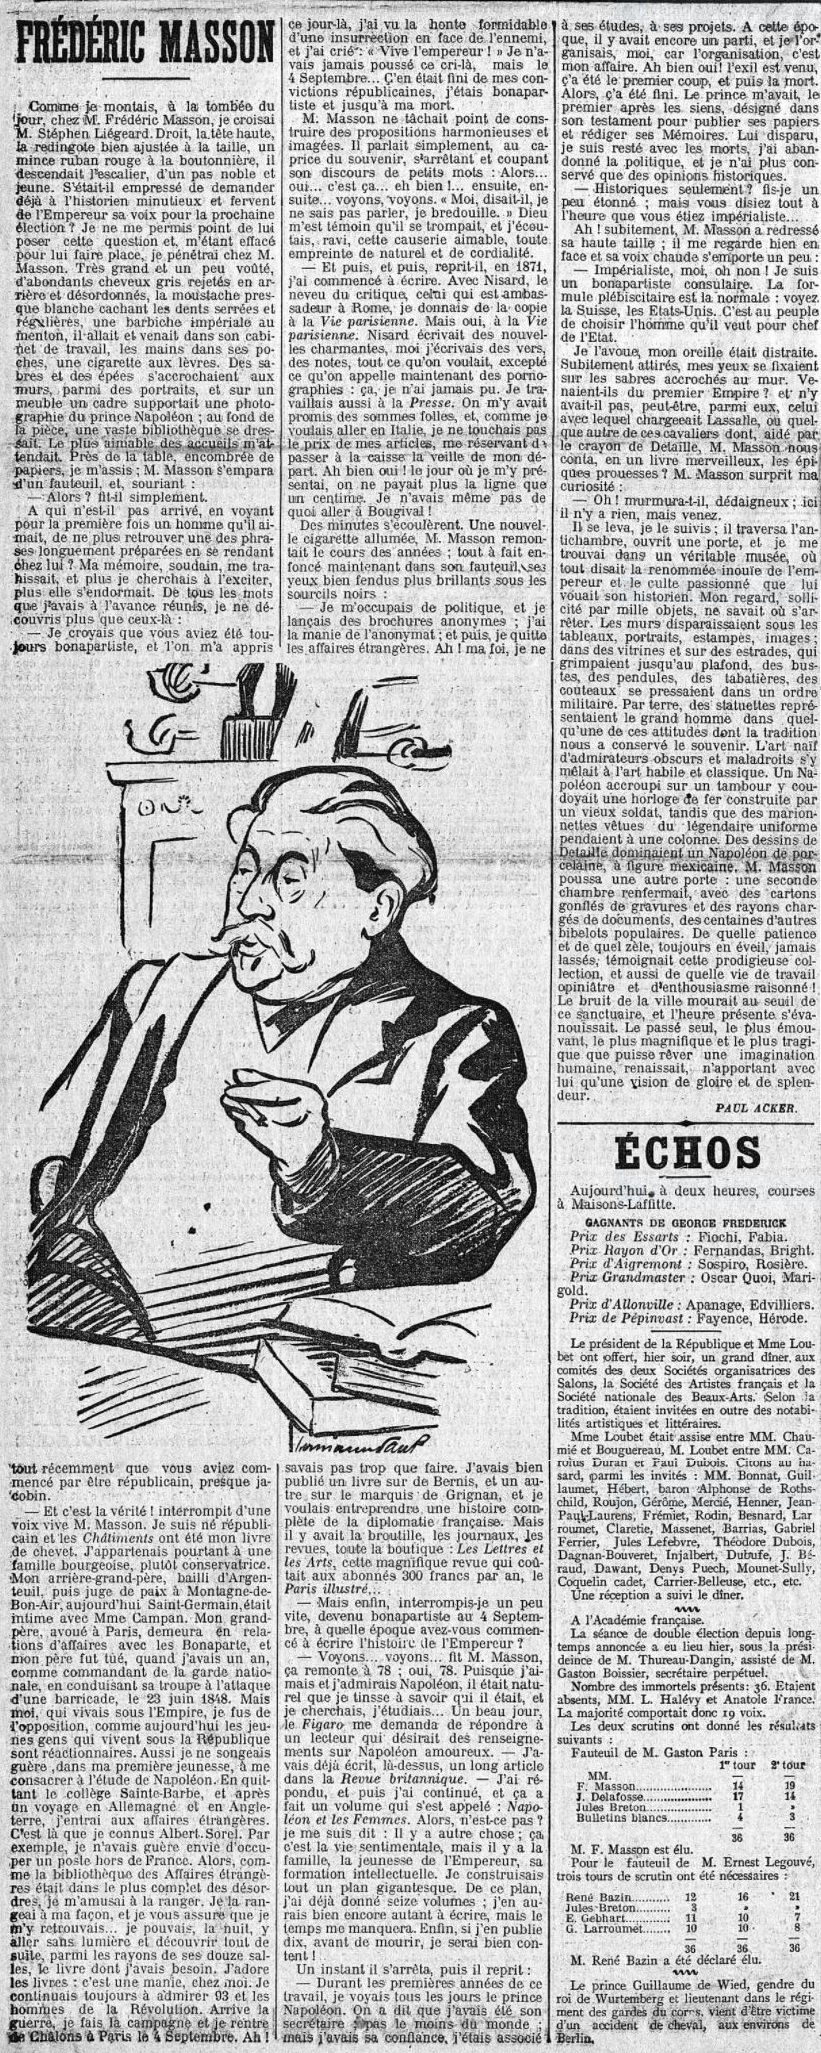 L'Echo de Paris 19 juin 1903